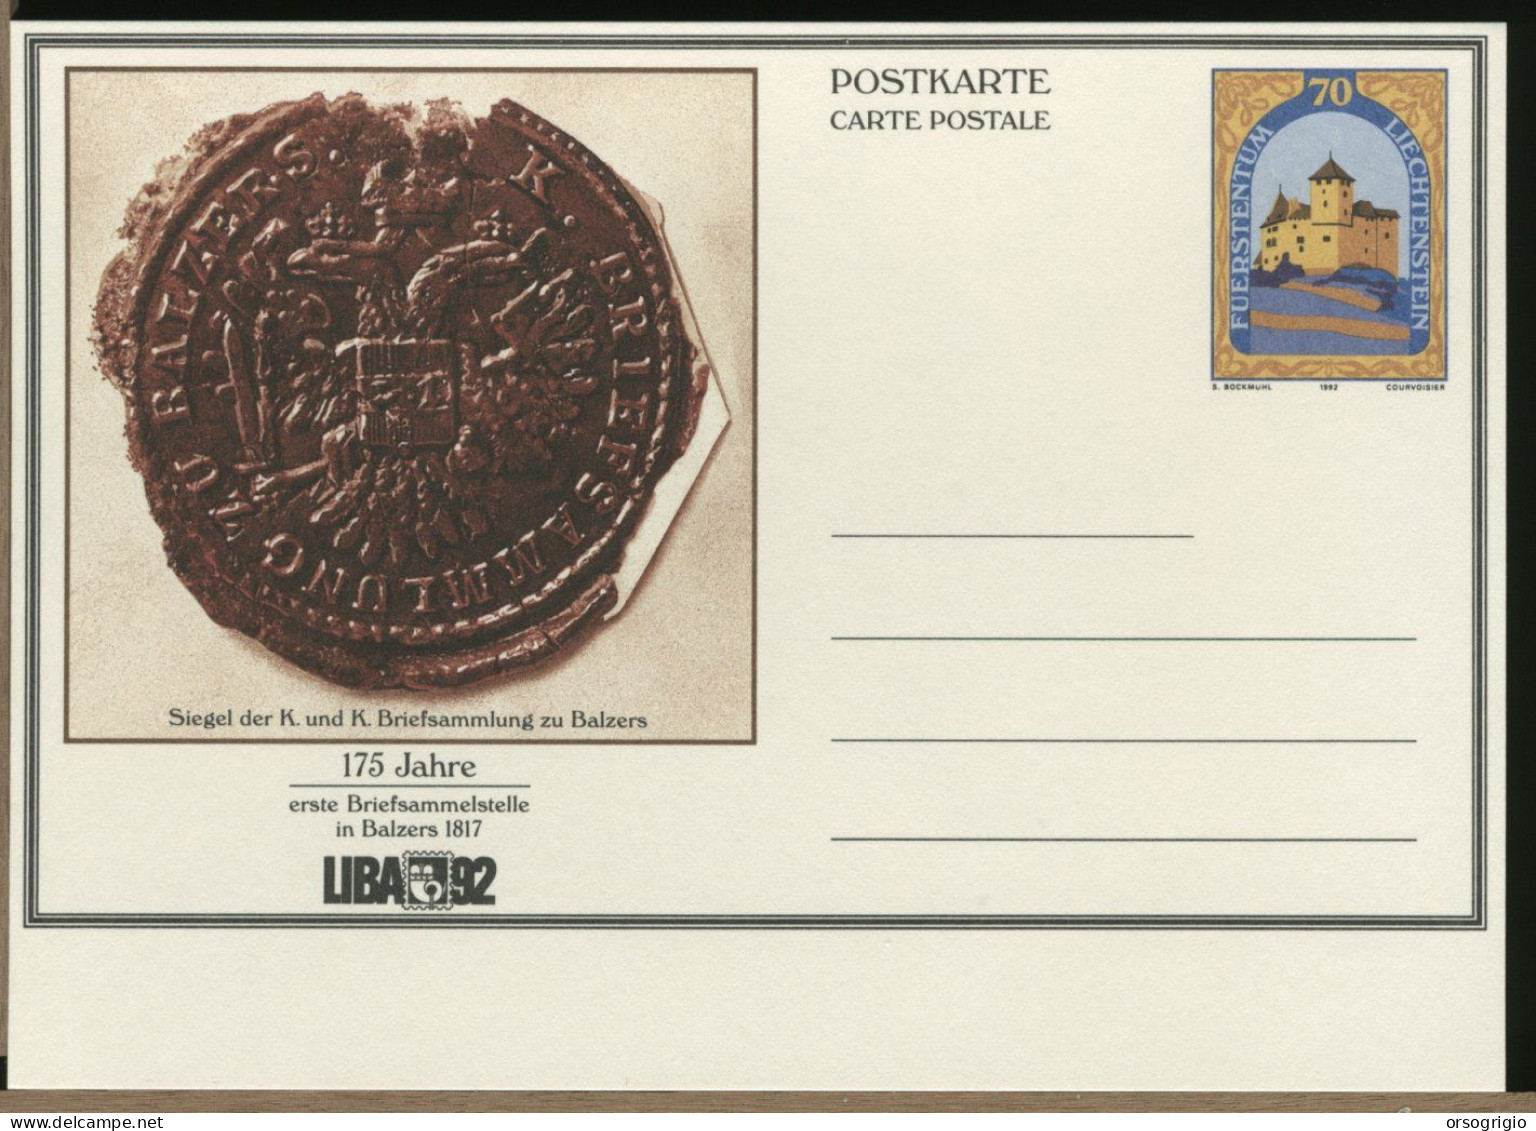 LIECHTENSTEIN - Cartolina Intero Postale - POSTKARTE - BALZERS - LIBA 1992 - Ganzsachen